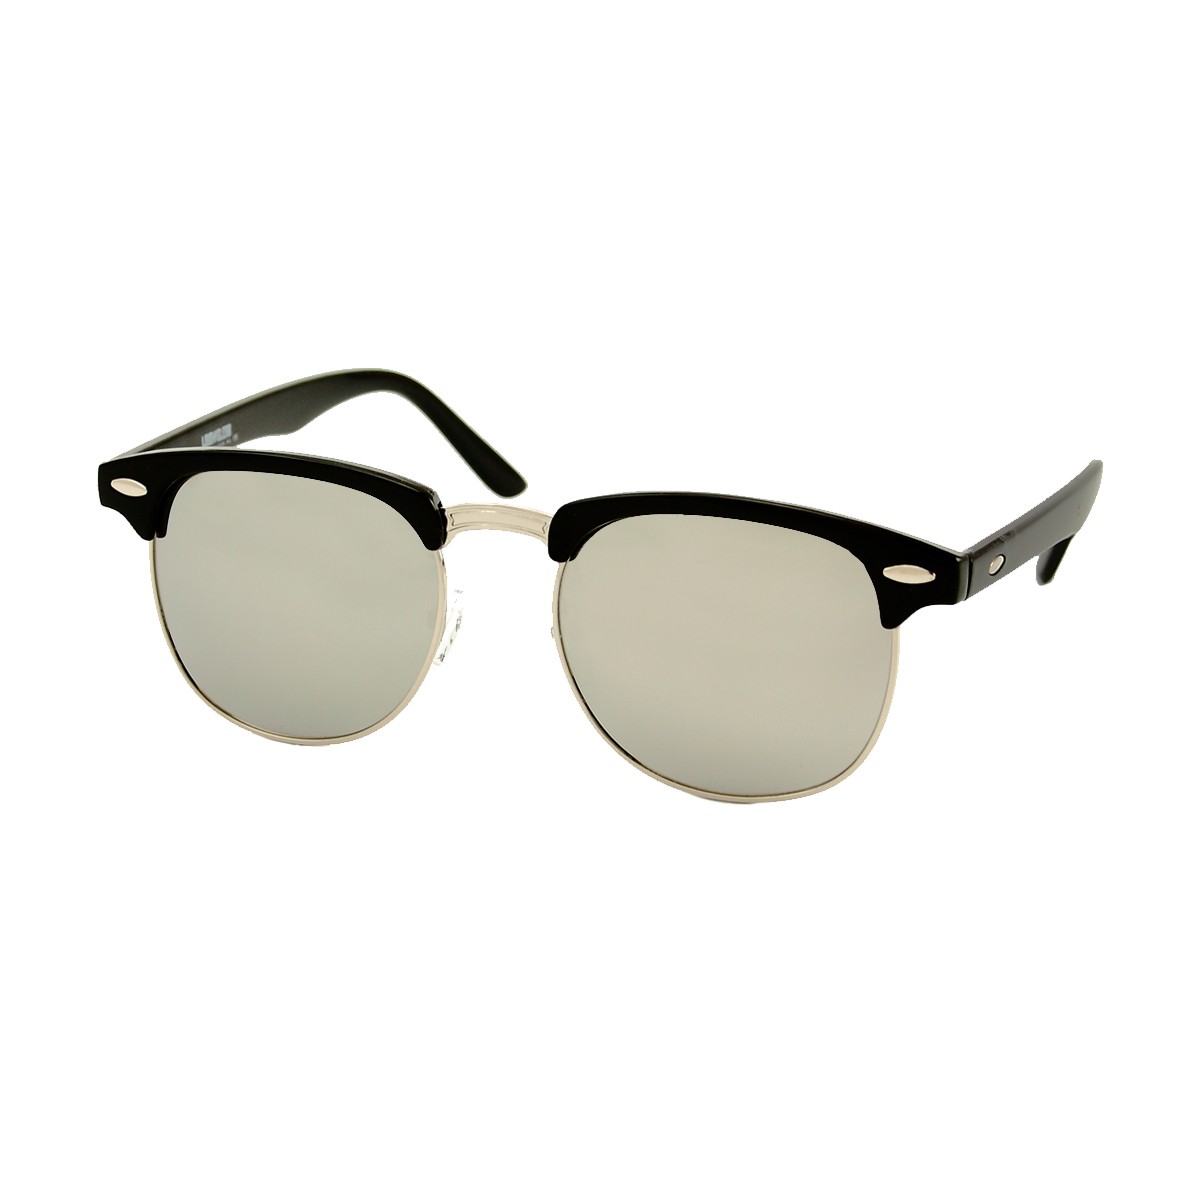 Clubmaster classic zonnebril zwart - zilveren